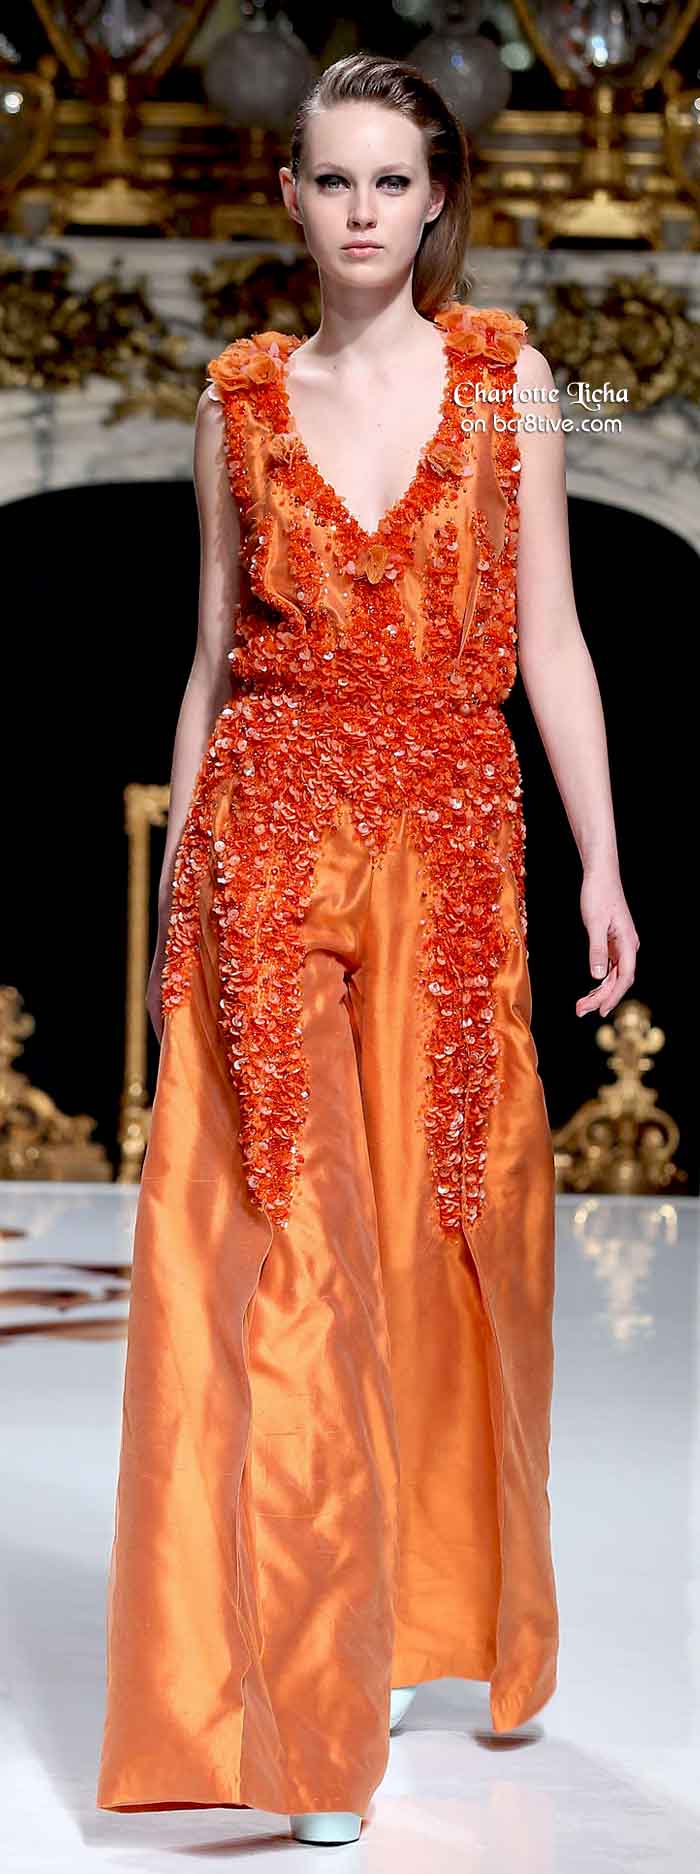 Charlotte Licha Spring 2014 Couture